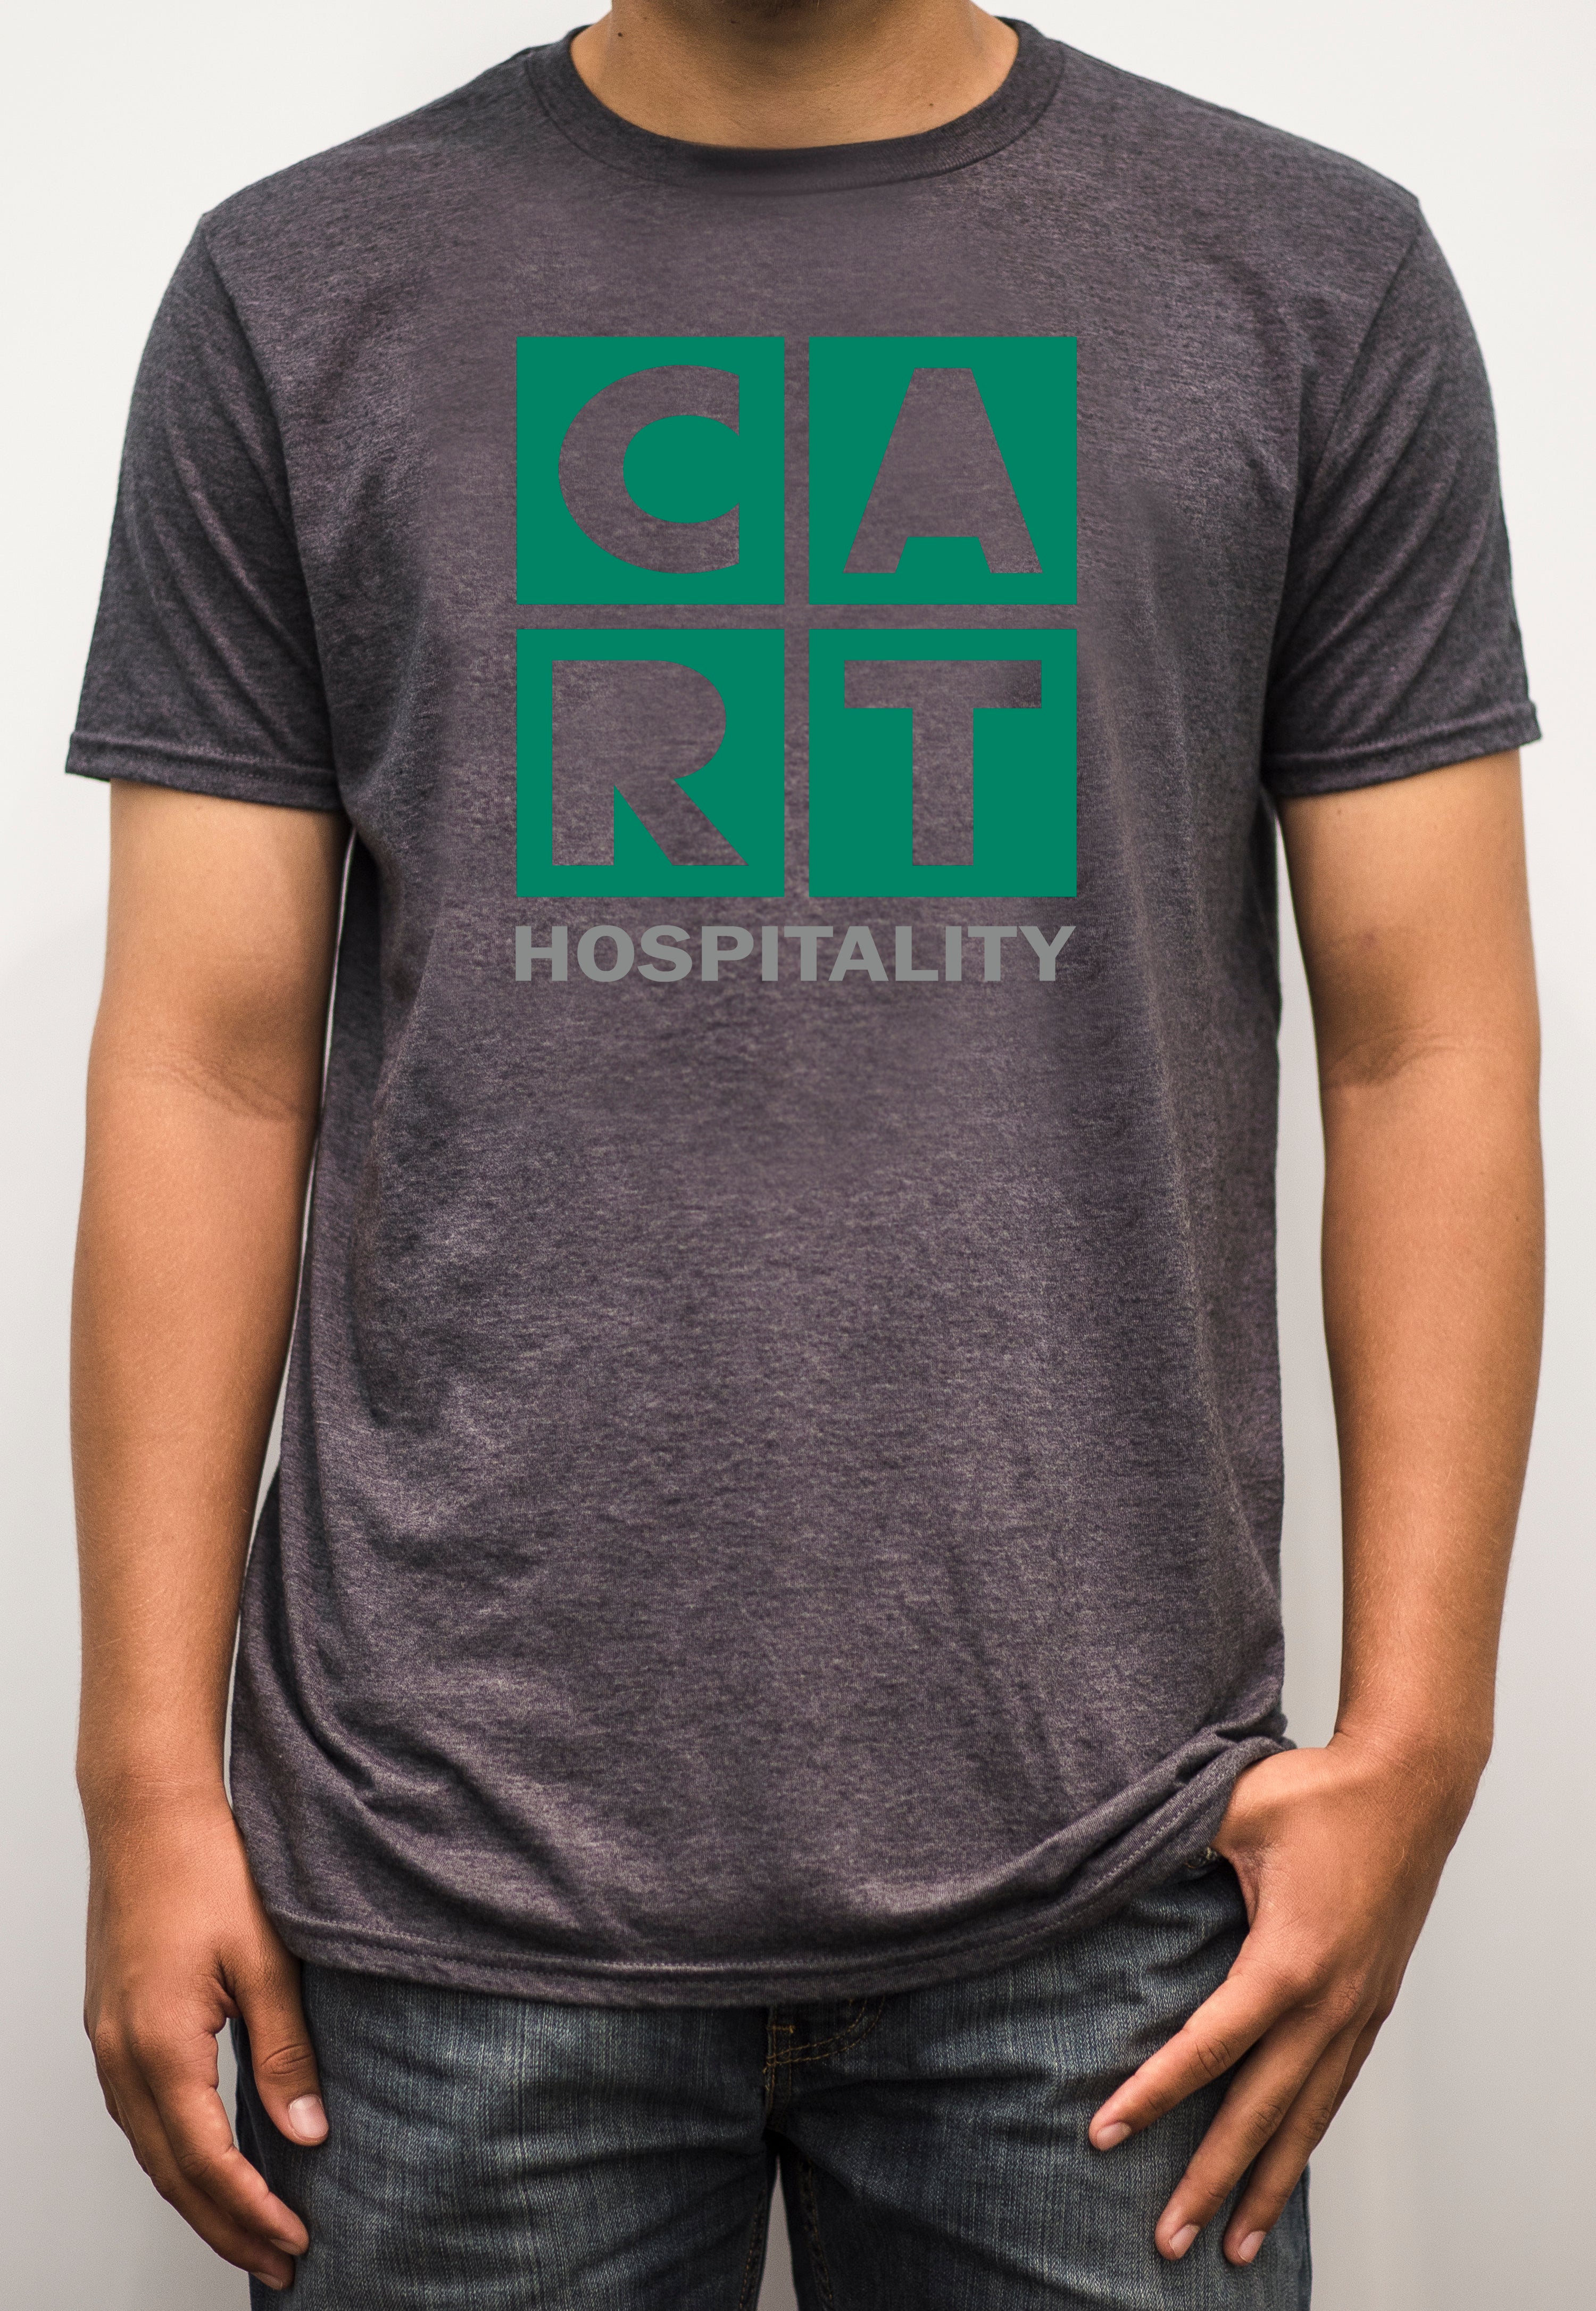 Short sleeve t-shirt - hospitality grey/green